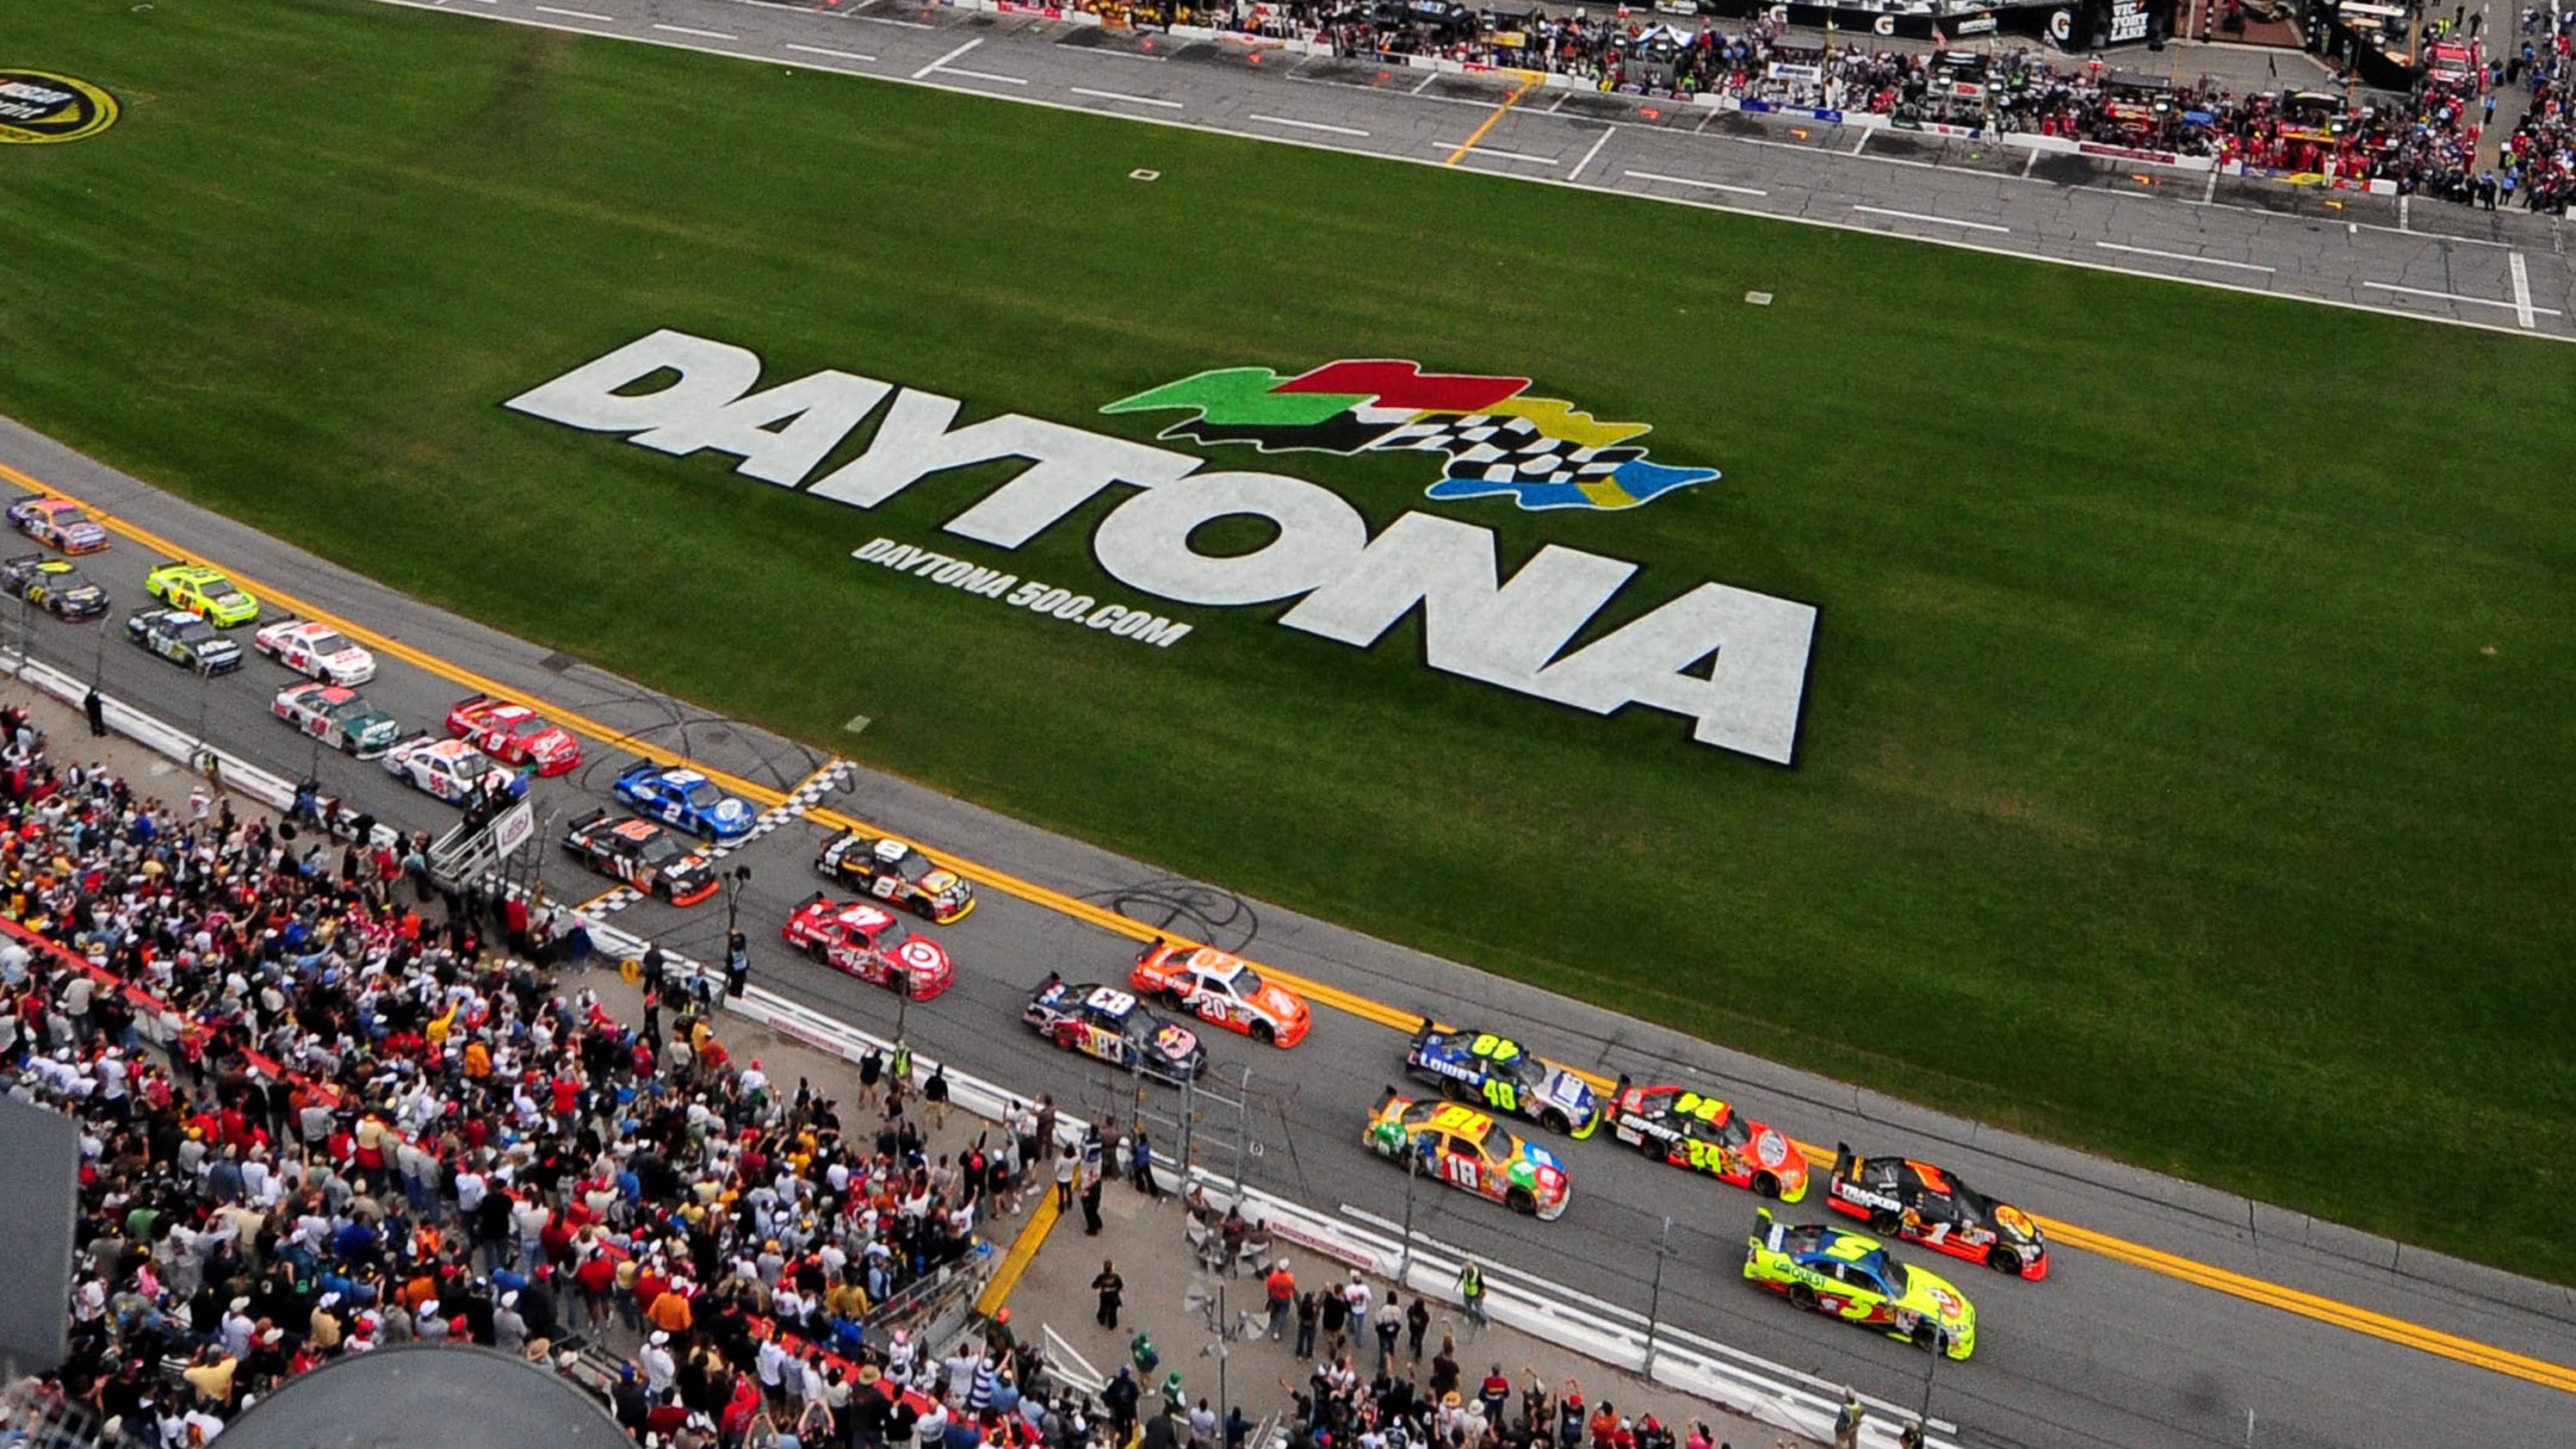 Daytona 500 2014: Start time, lineup, TV schedule, live streaming